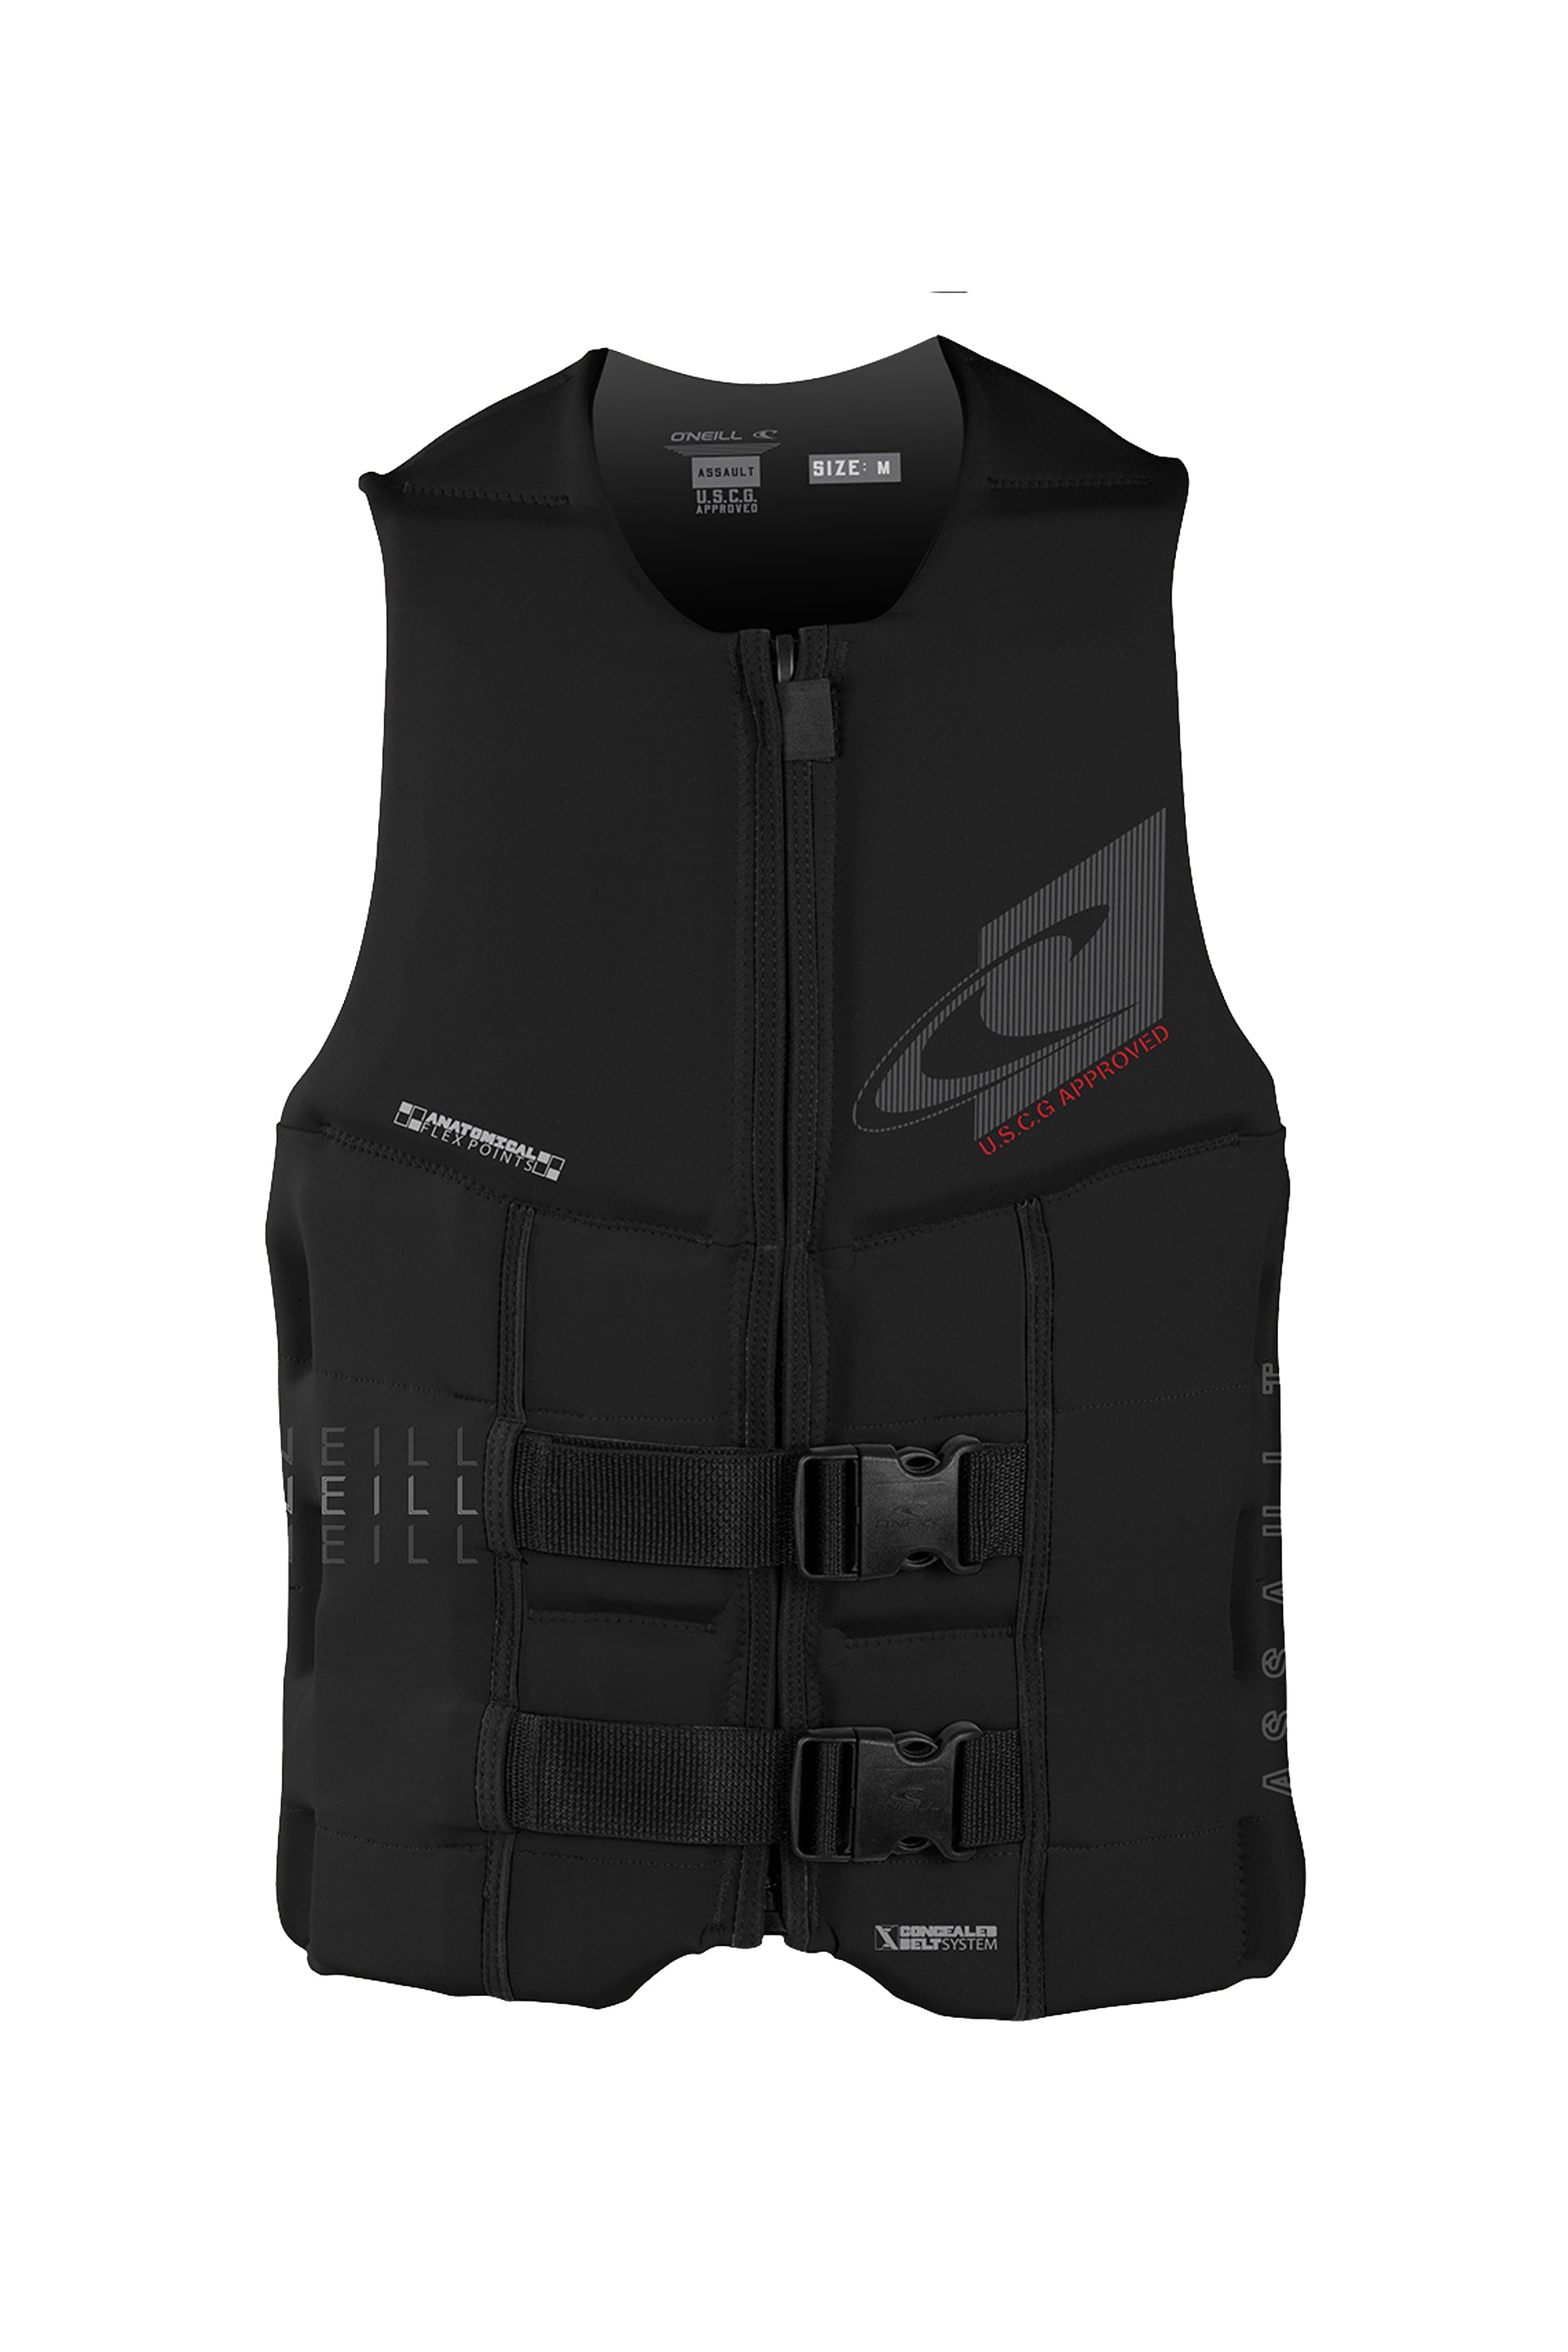 O Neill Assault FZ USCG Life Vest A00-Black-Black XXL